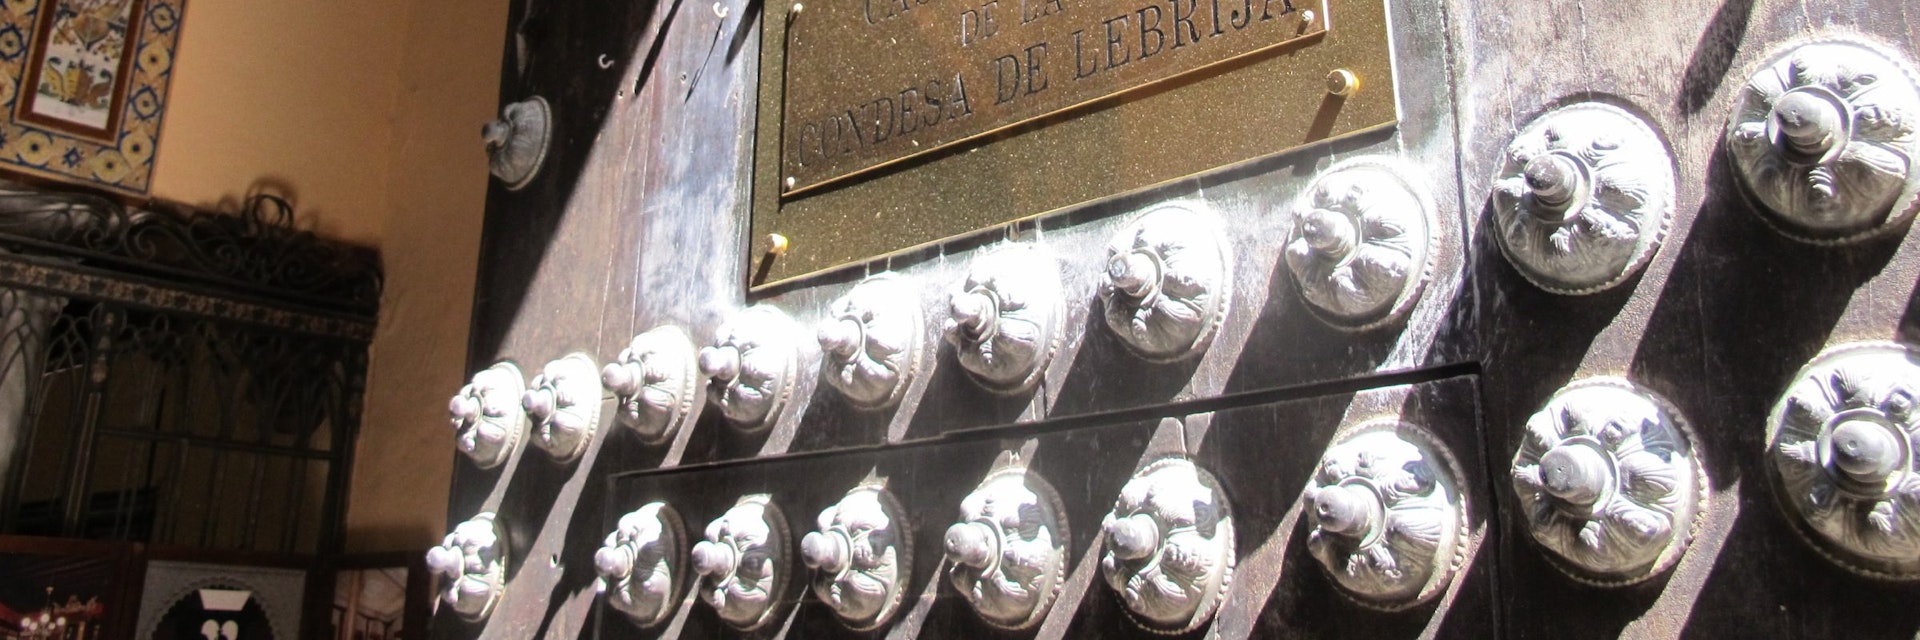 Palacio de Lebrija sign on door.